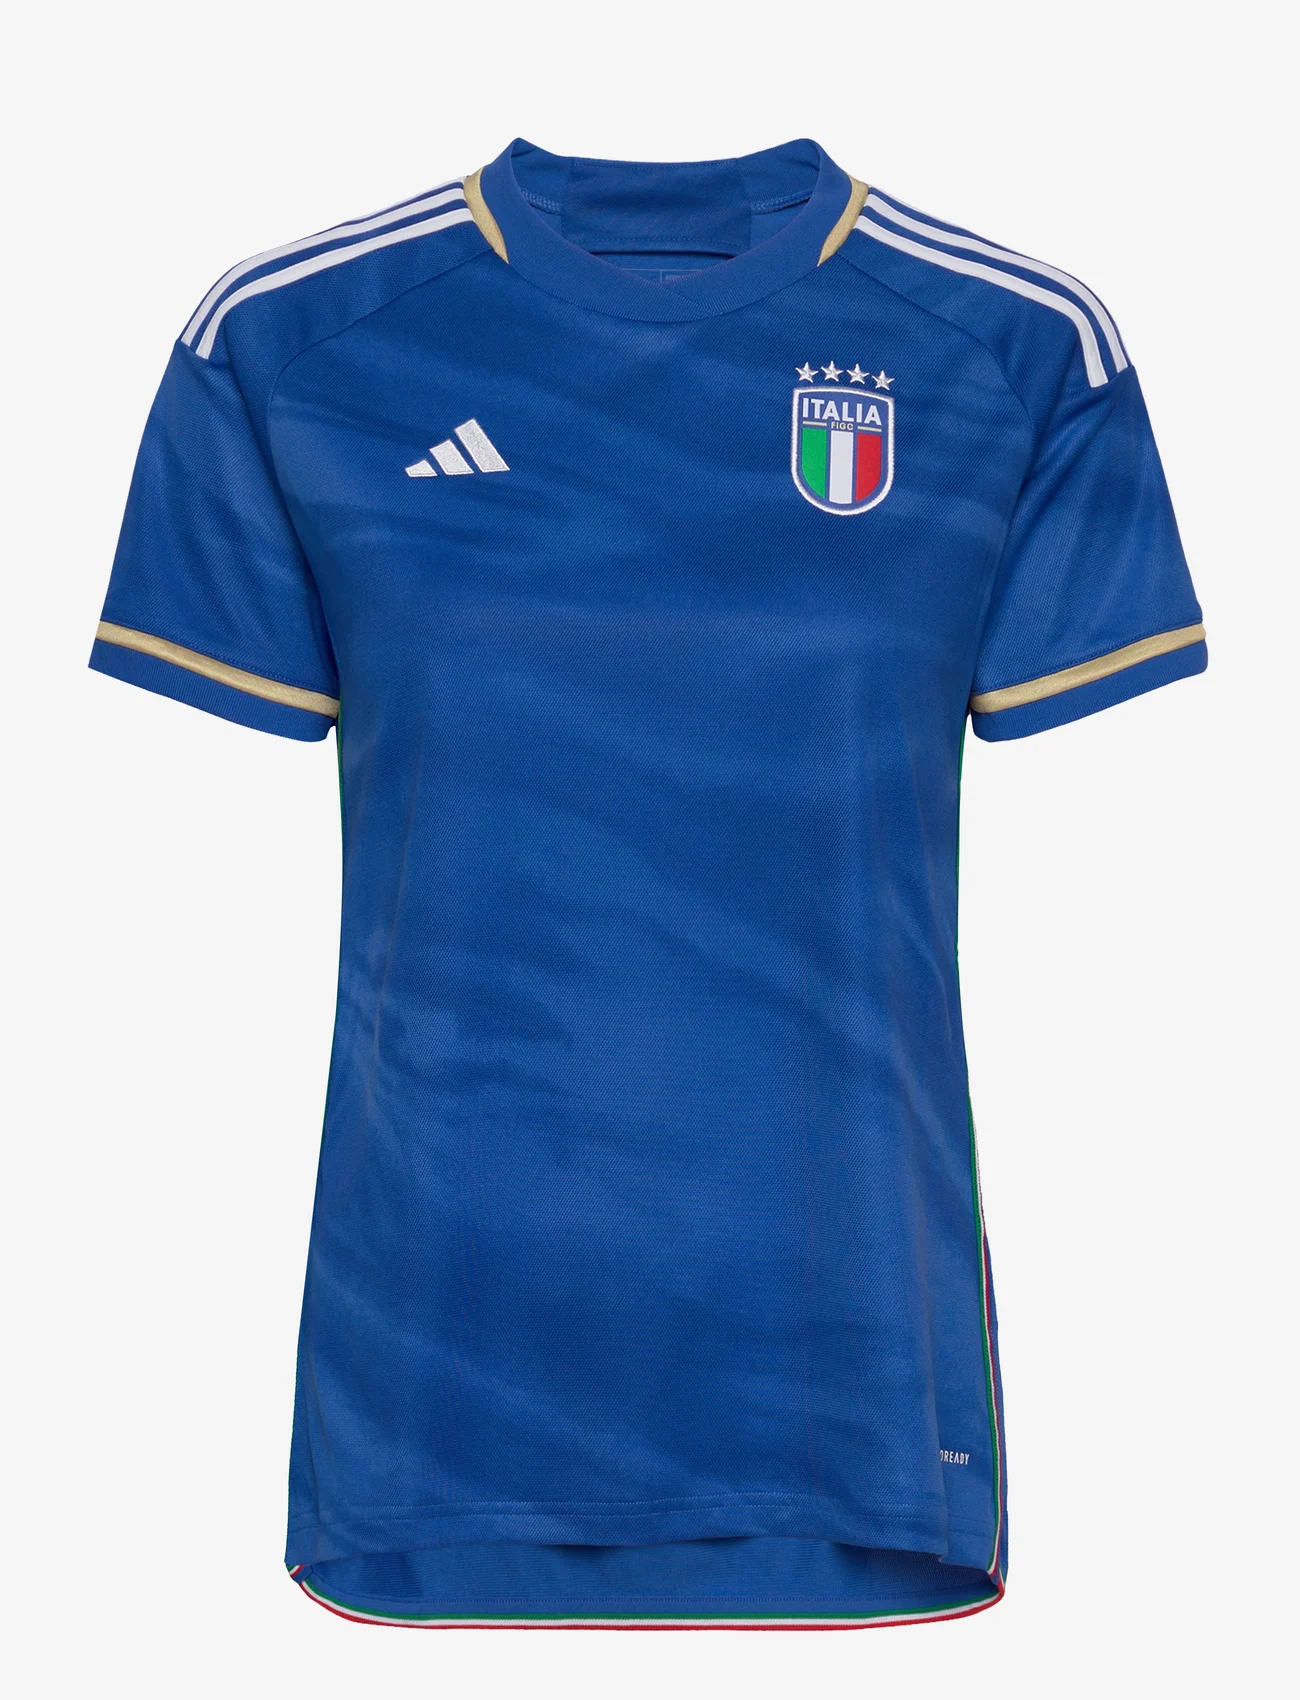 adidas Performance - FIGC H JSY W - t-shirts & tops - blue - 0